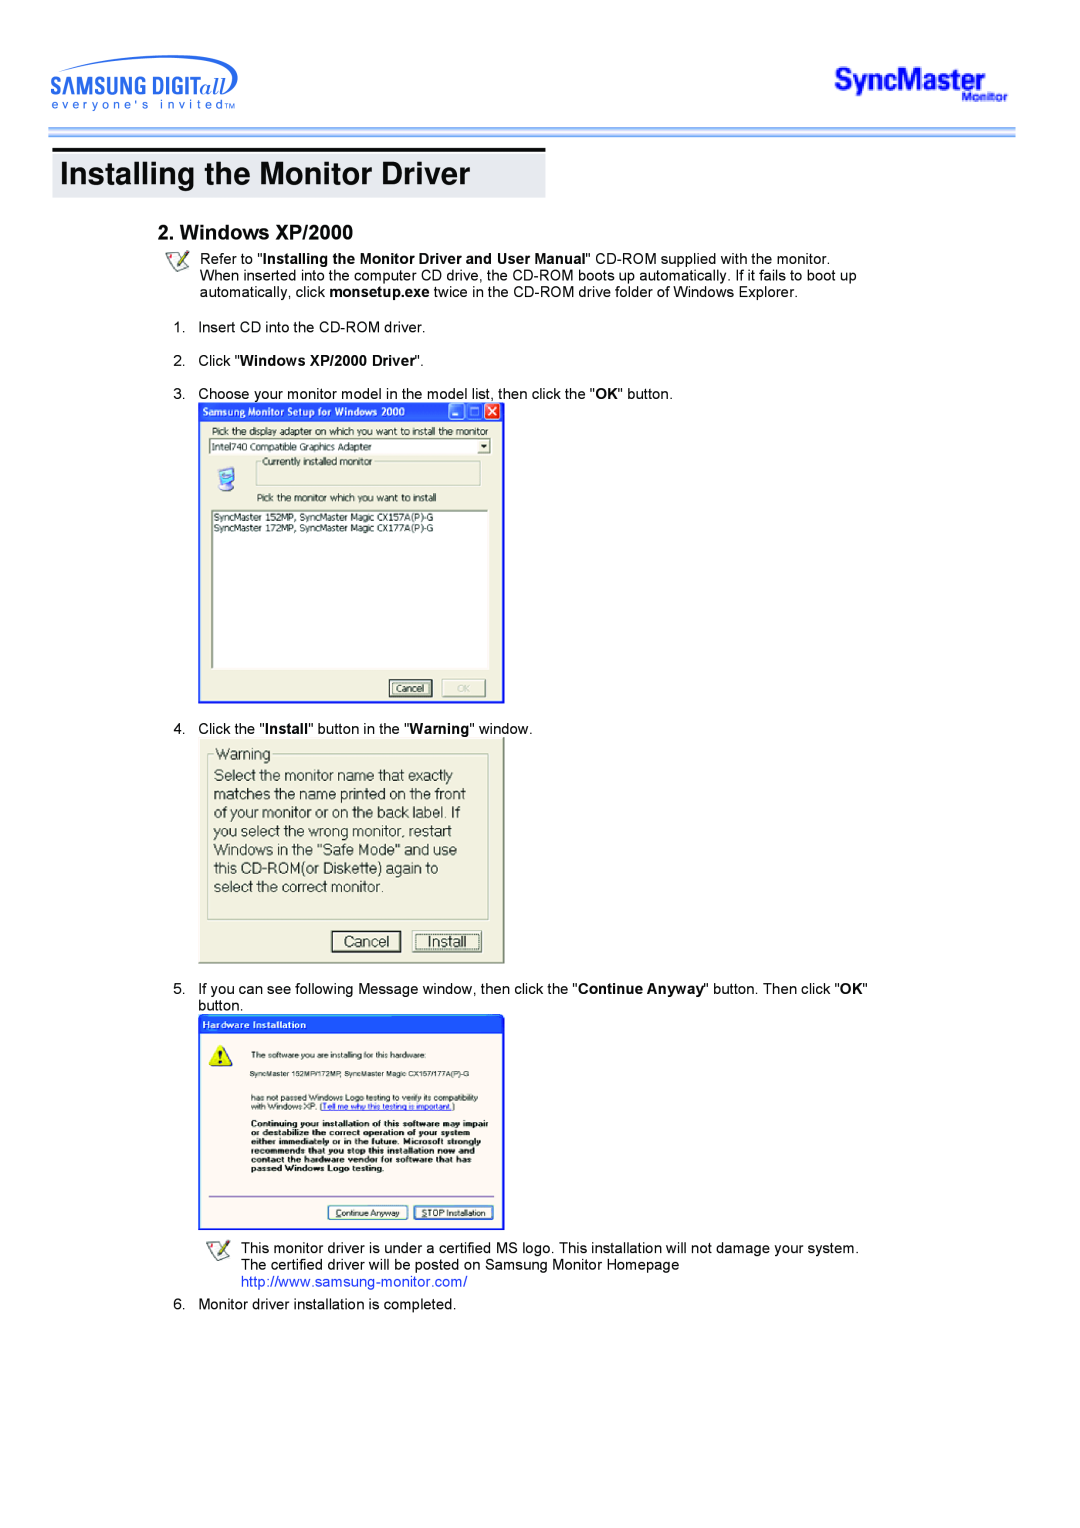 Samsung 173MP manual Installing the Monitor Driver, Click Windows XP/2000 Driver 